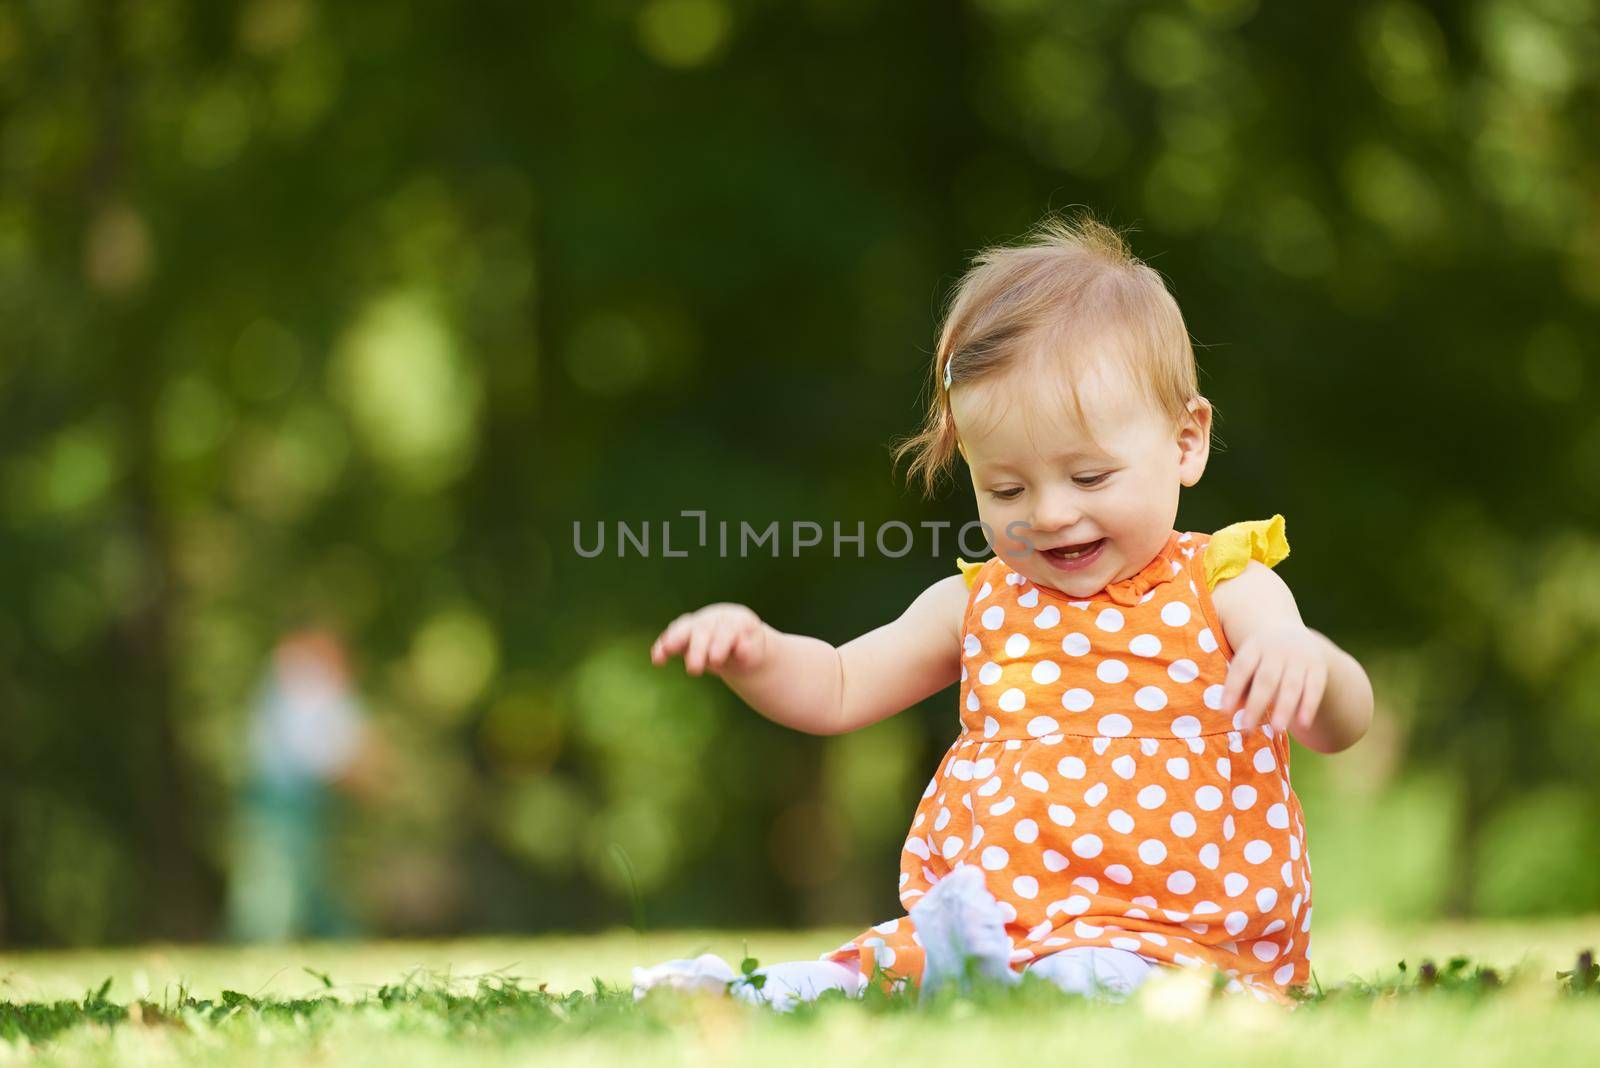 baby in park by dotshock